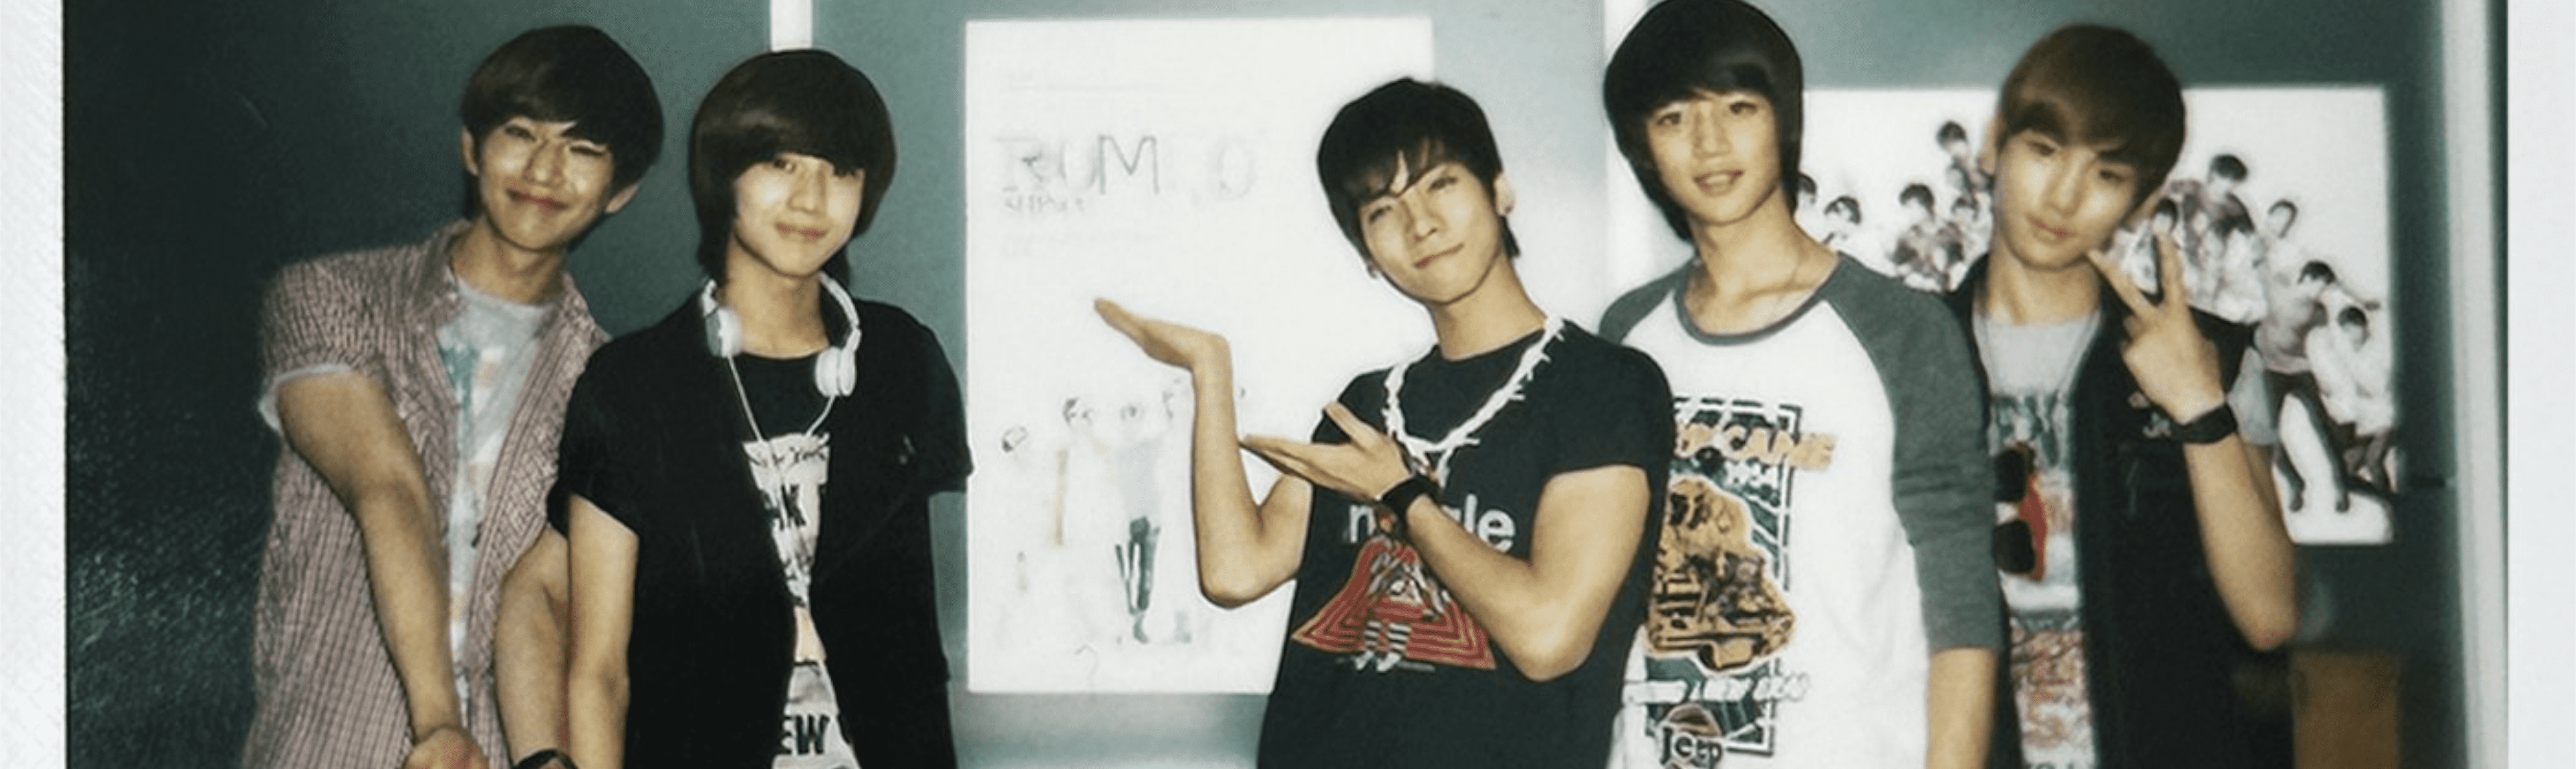 SHINee group picture 2009: Onew, Taemin, Jonghyun, Minho & Key